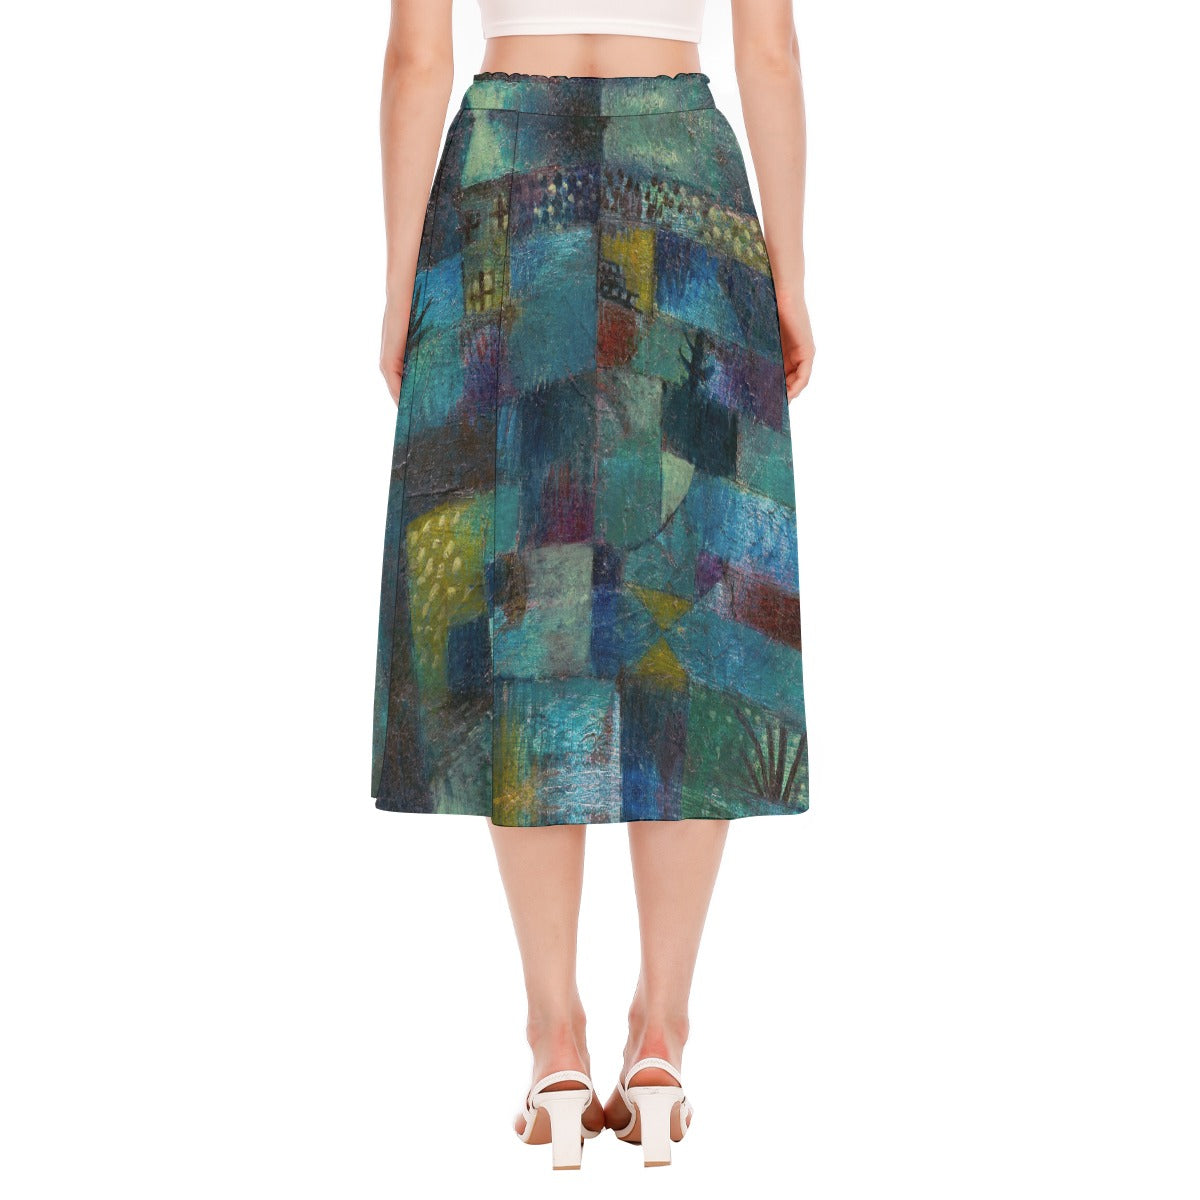 Artistic flowing skirt inspired by Paul Klee's Terraced Garden